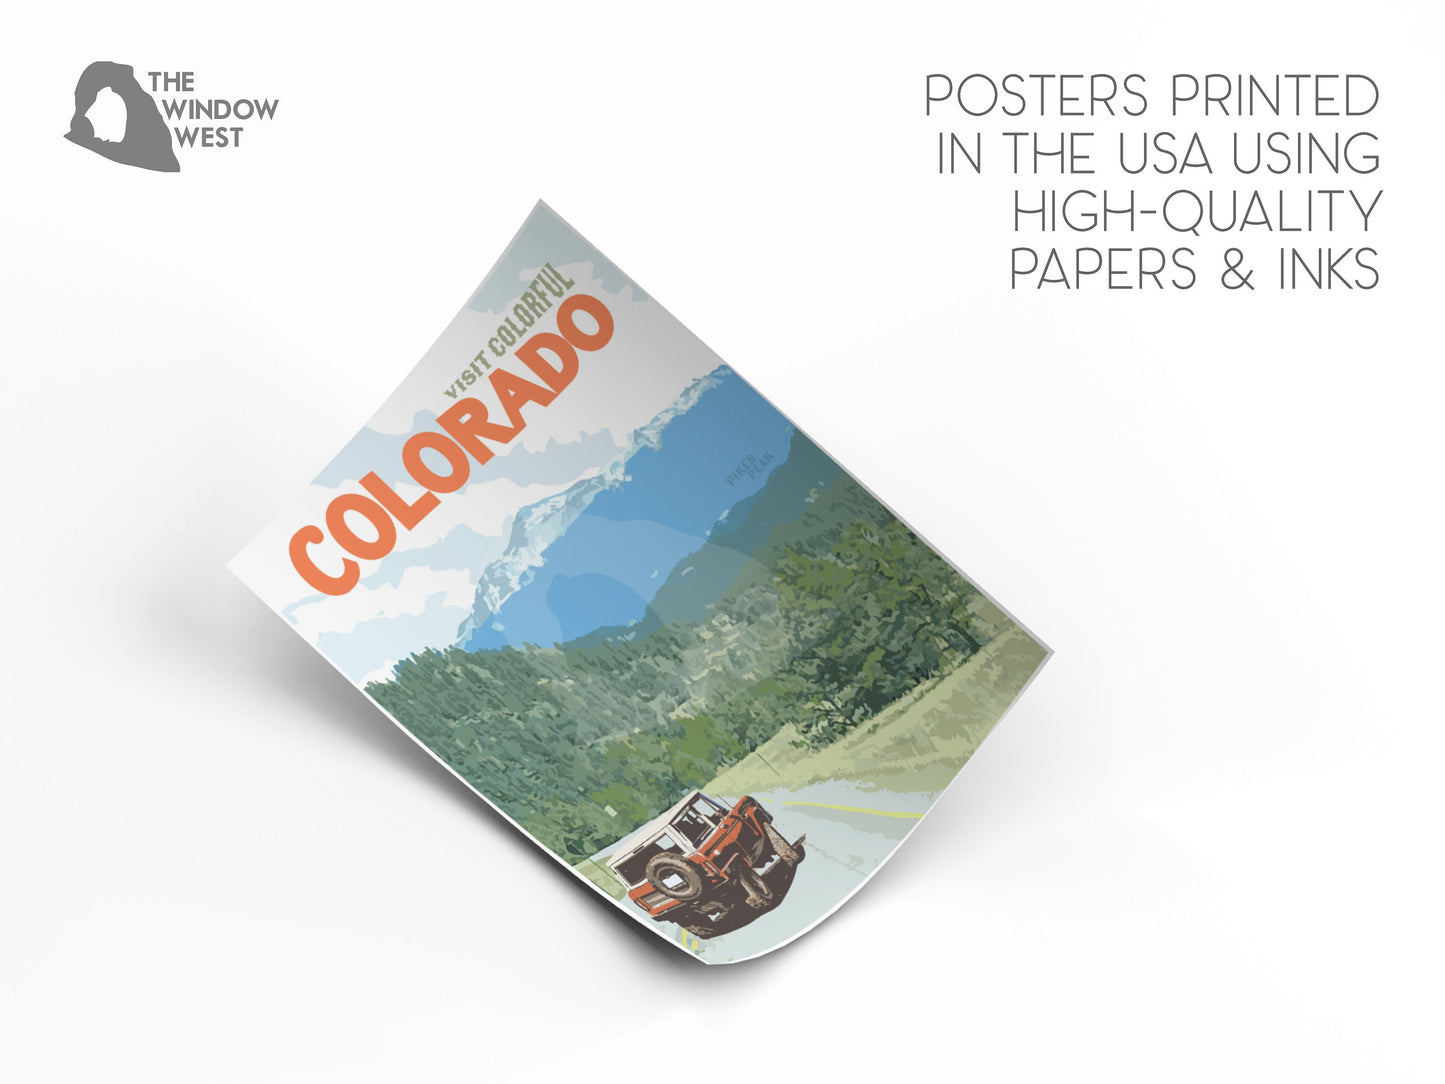 Colorado Pikes Peak Print, Colorado Mountain Poster, Colorado Vintage Style Travel Art